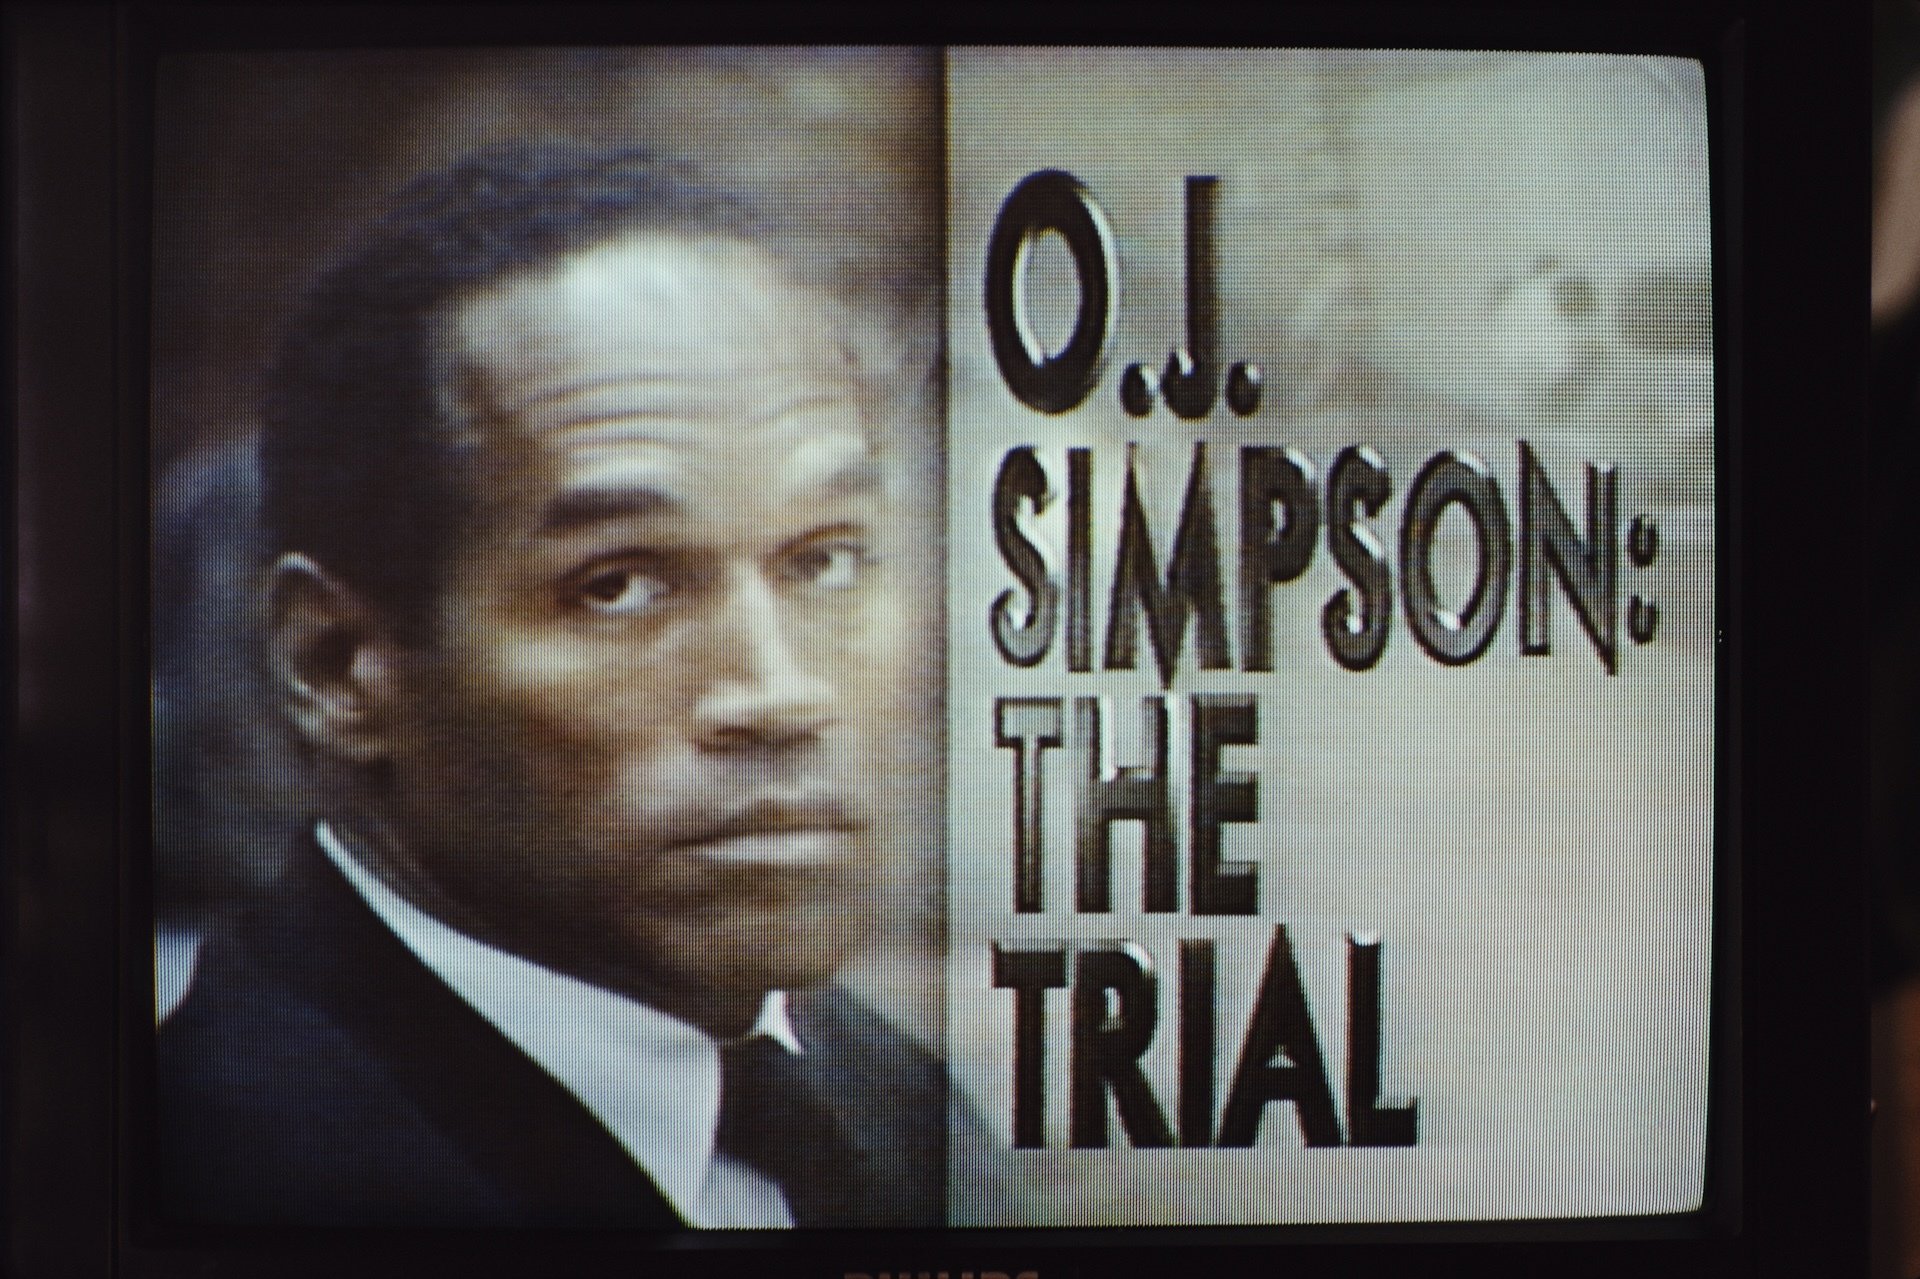 OJ Simpson on trial on a TV screen.